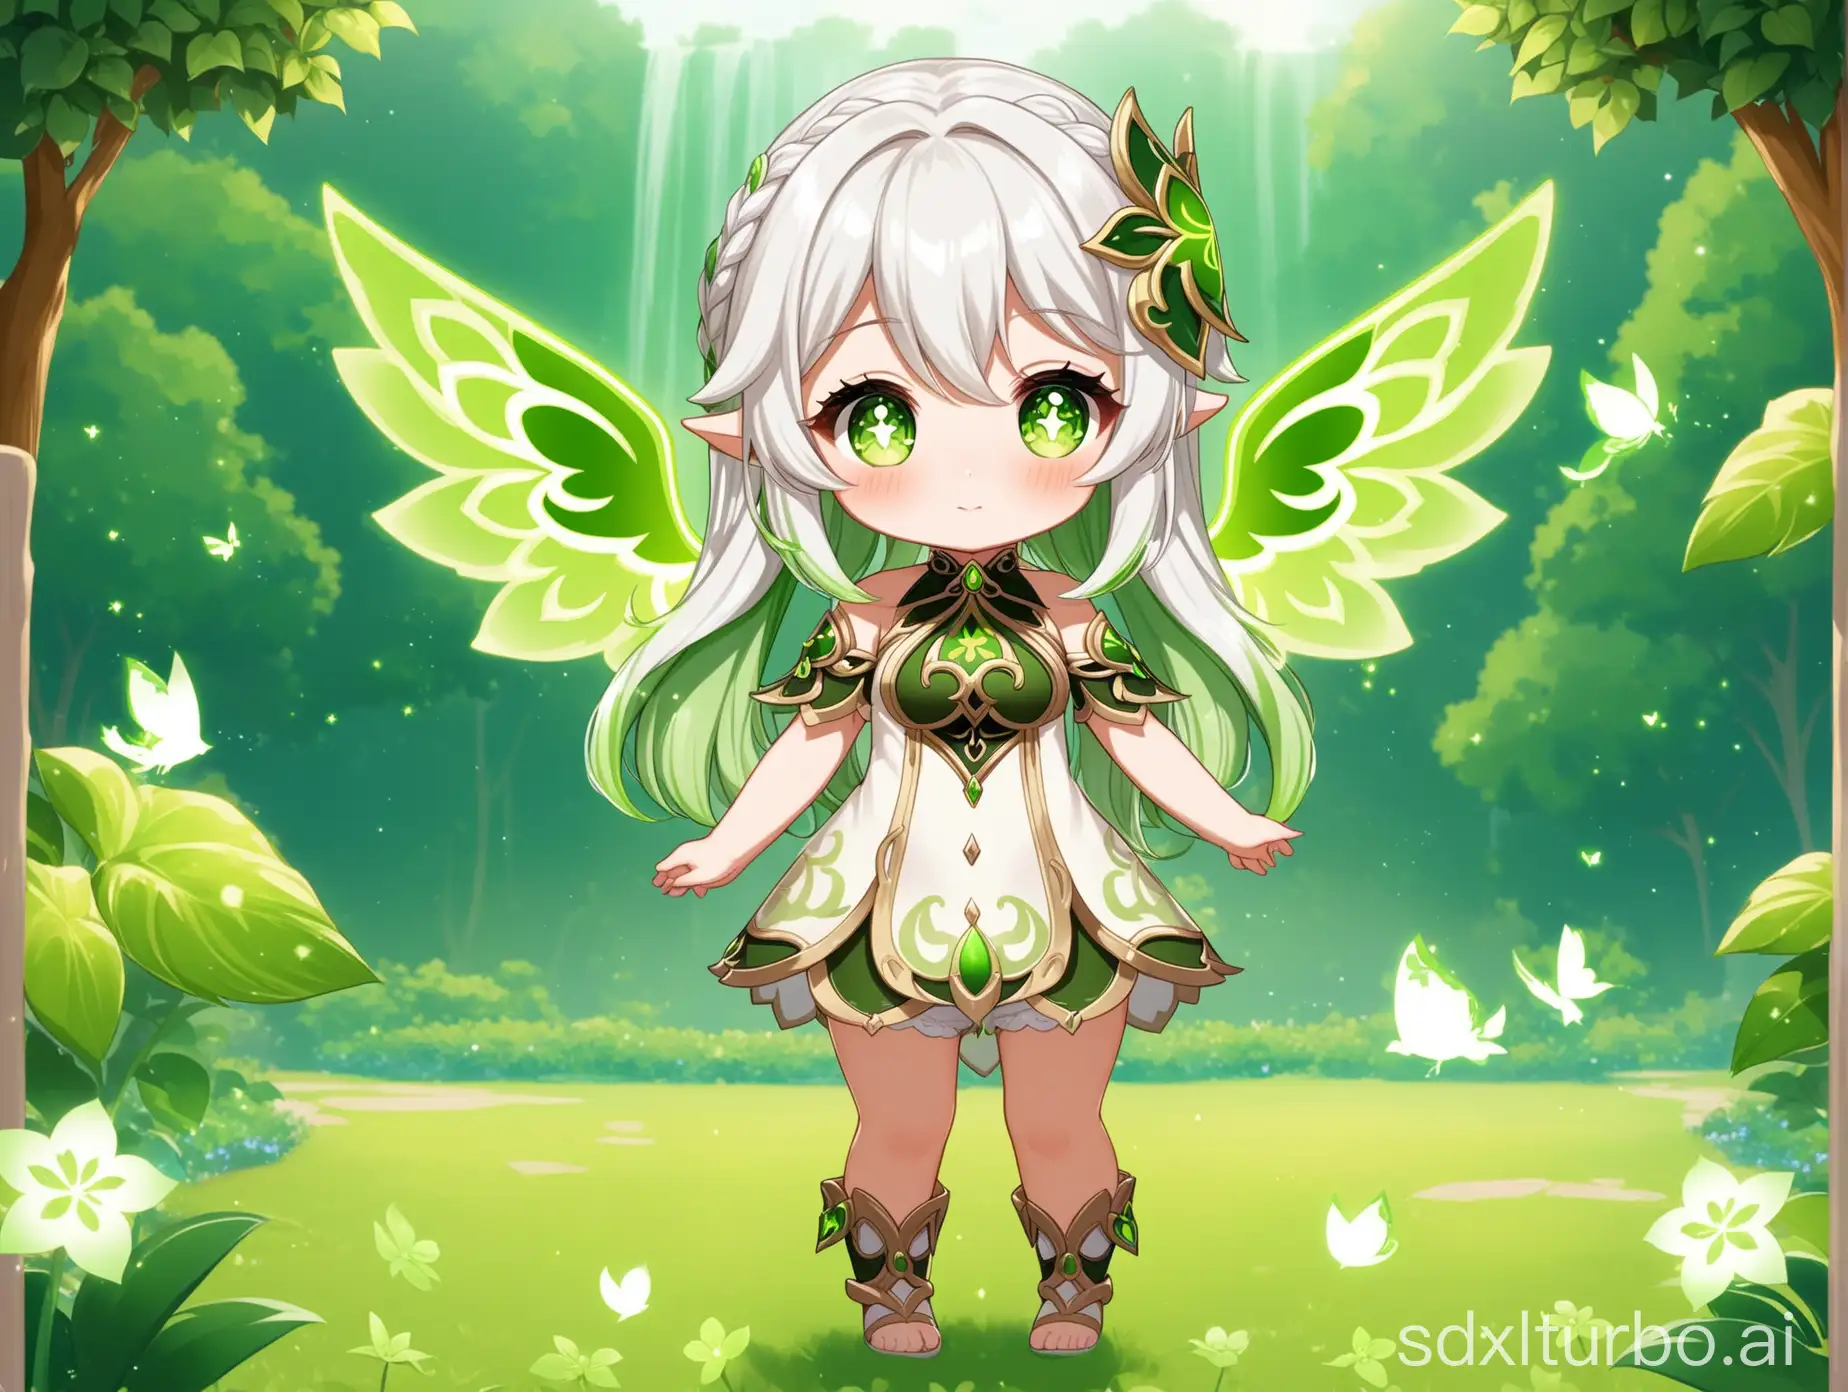 Nahida-from-Genshin-Impact-with-Emerald-Wings-in-a-Garden